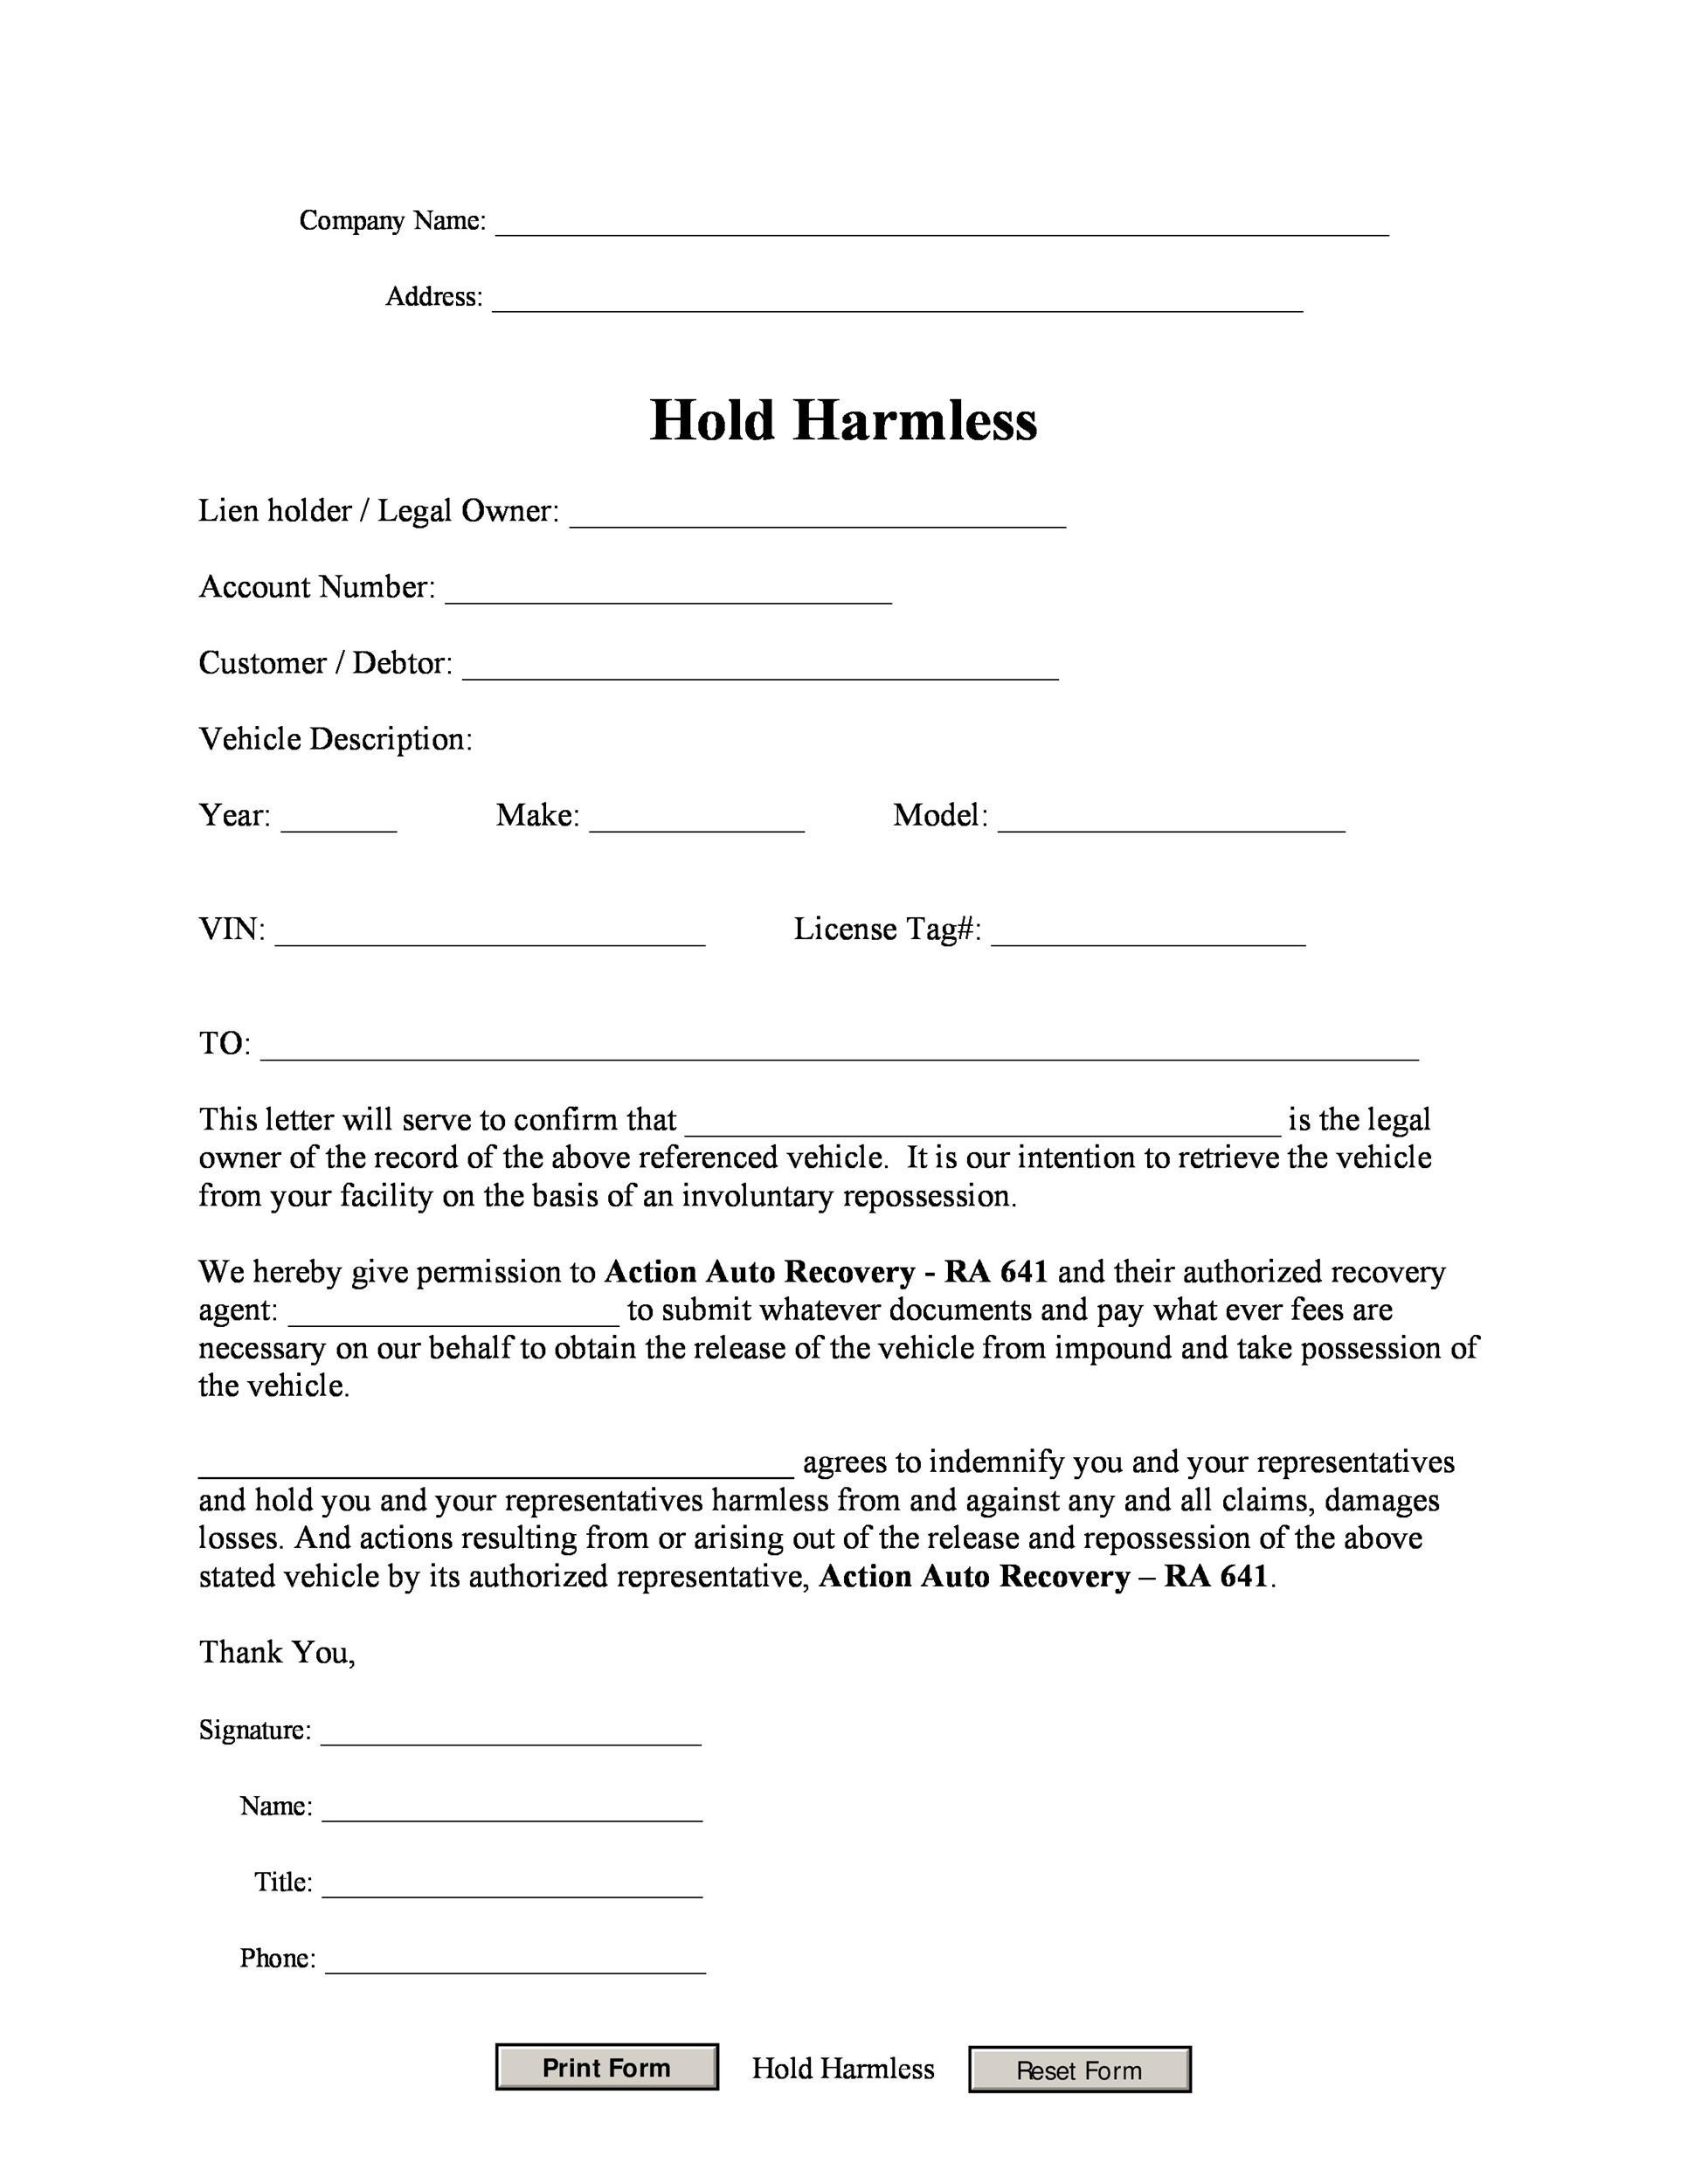 40-hold-harmless-agreement-templates-free-templatelab